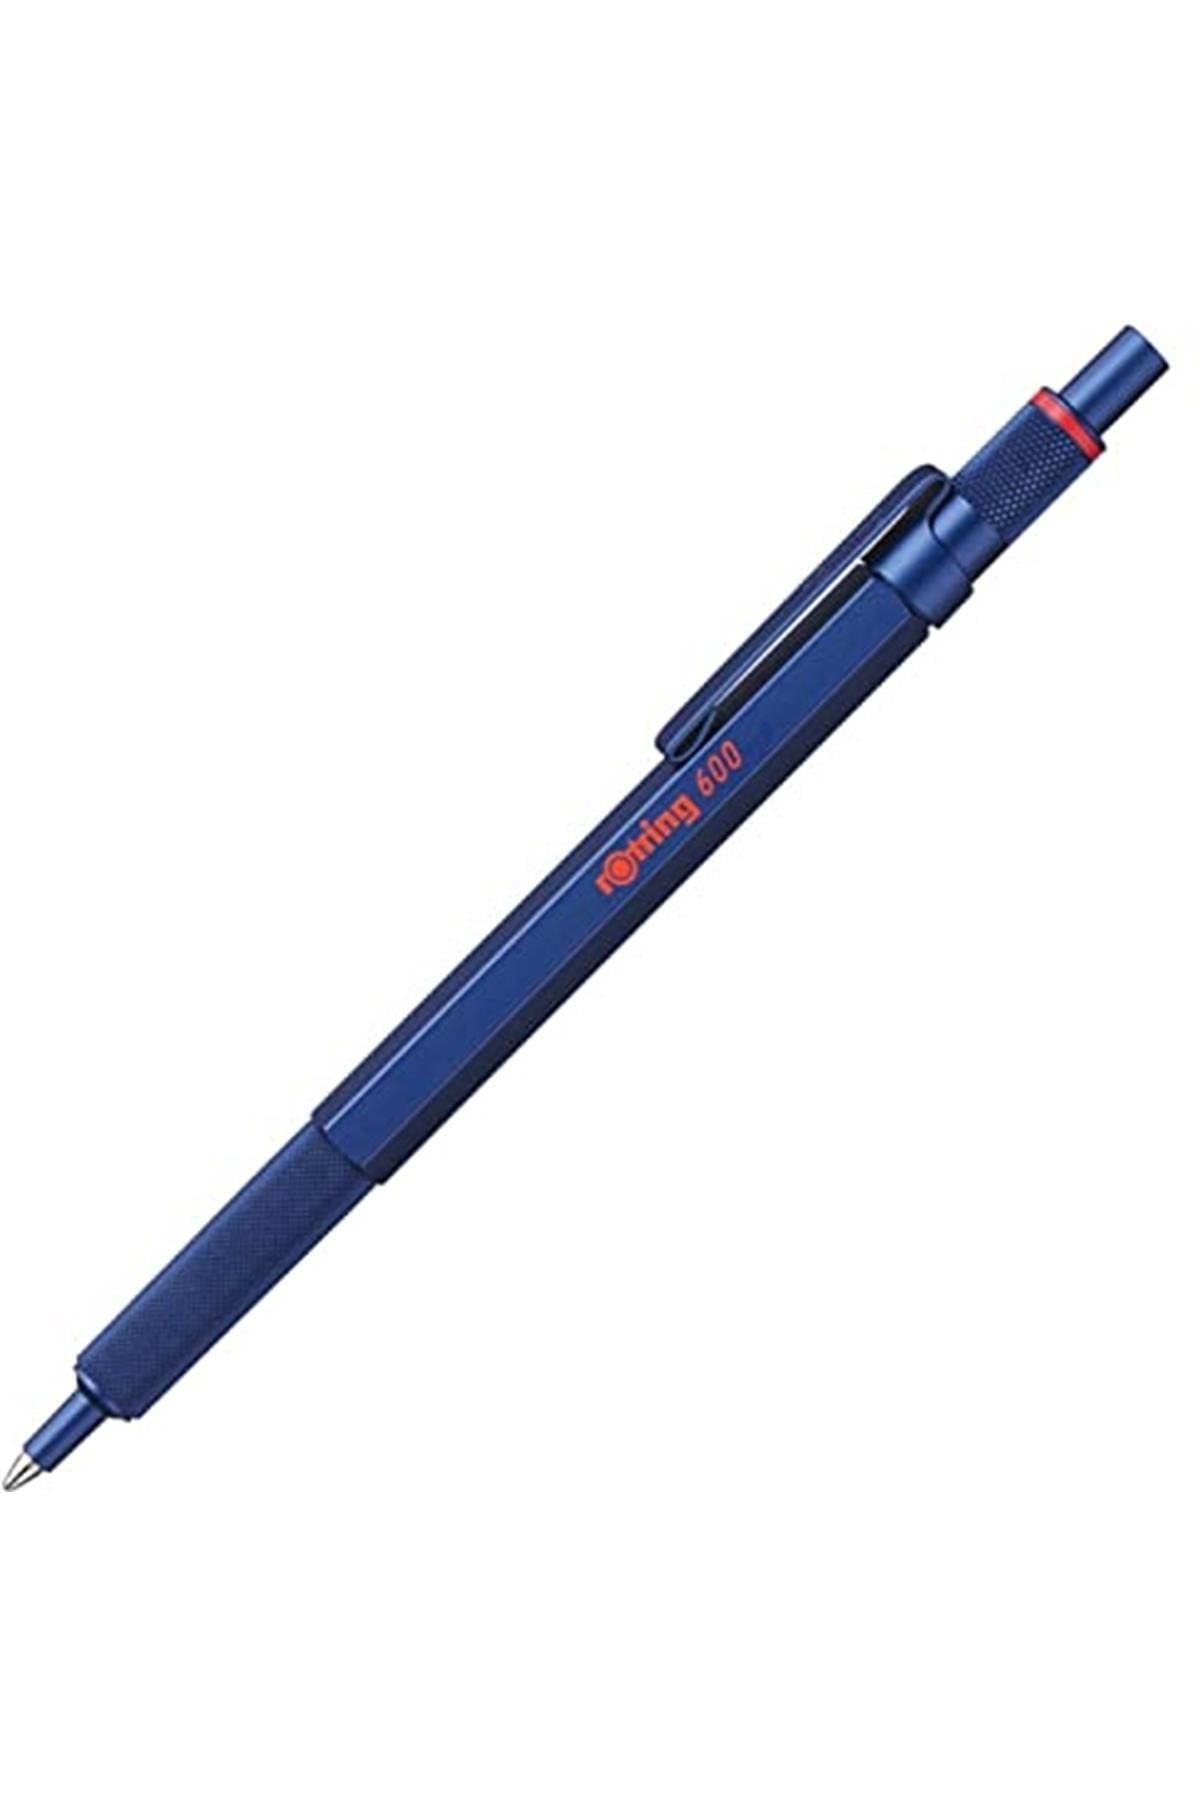 Rotring Marka: 600 Tükenmez Kalem, Mavi Kategori: Uçlu Kalem